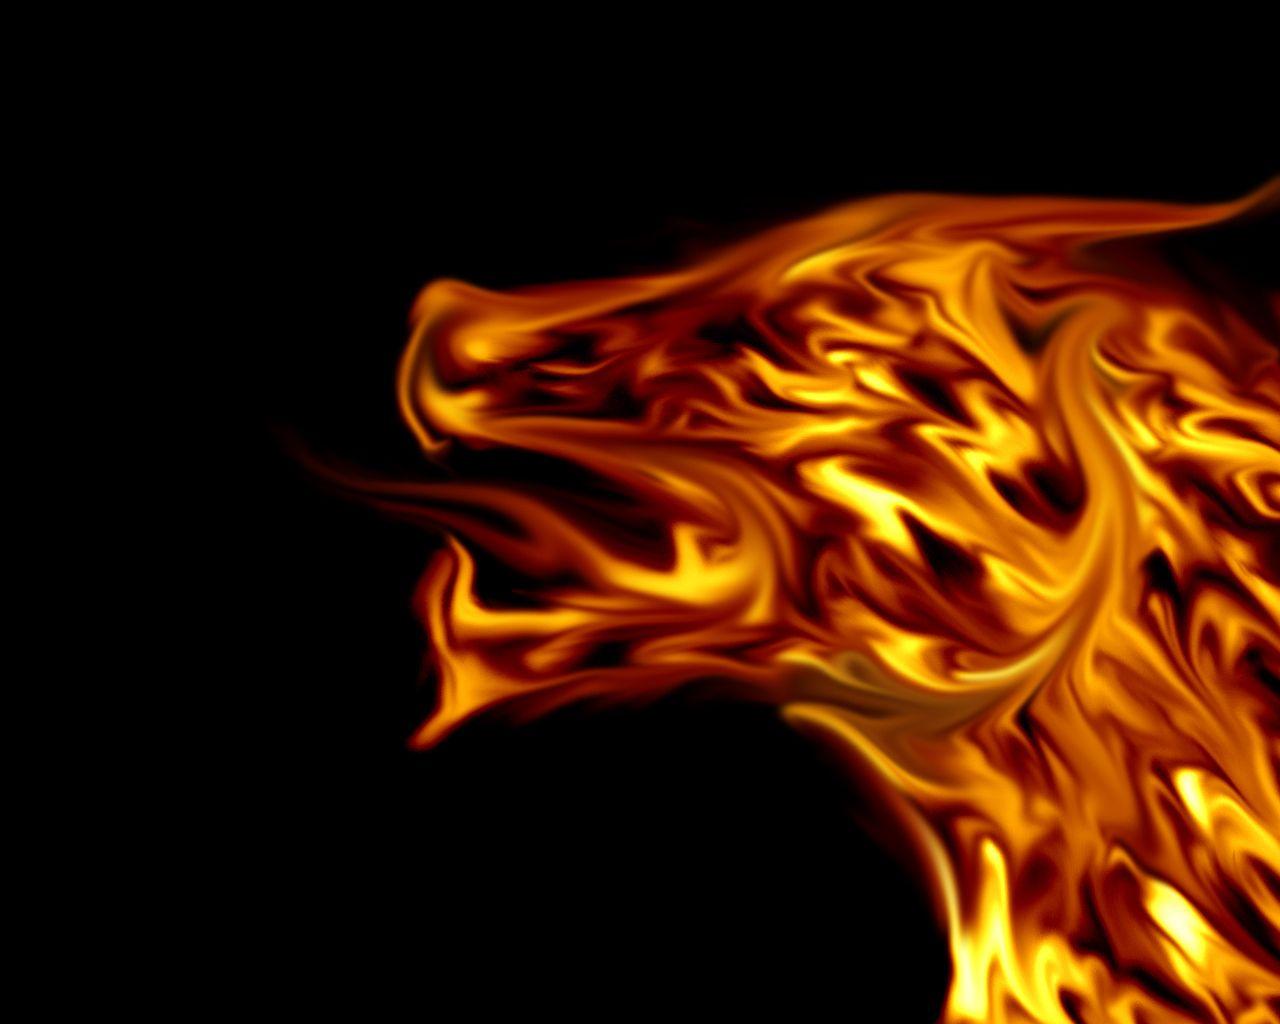 funkyrach01 Wallpaper: Fire Dragon. Dragon picture, Fire dragon, Fire art